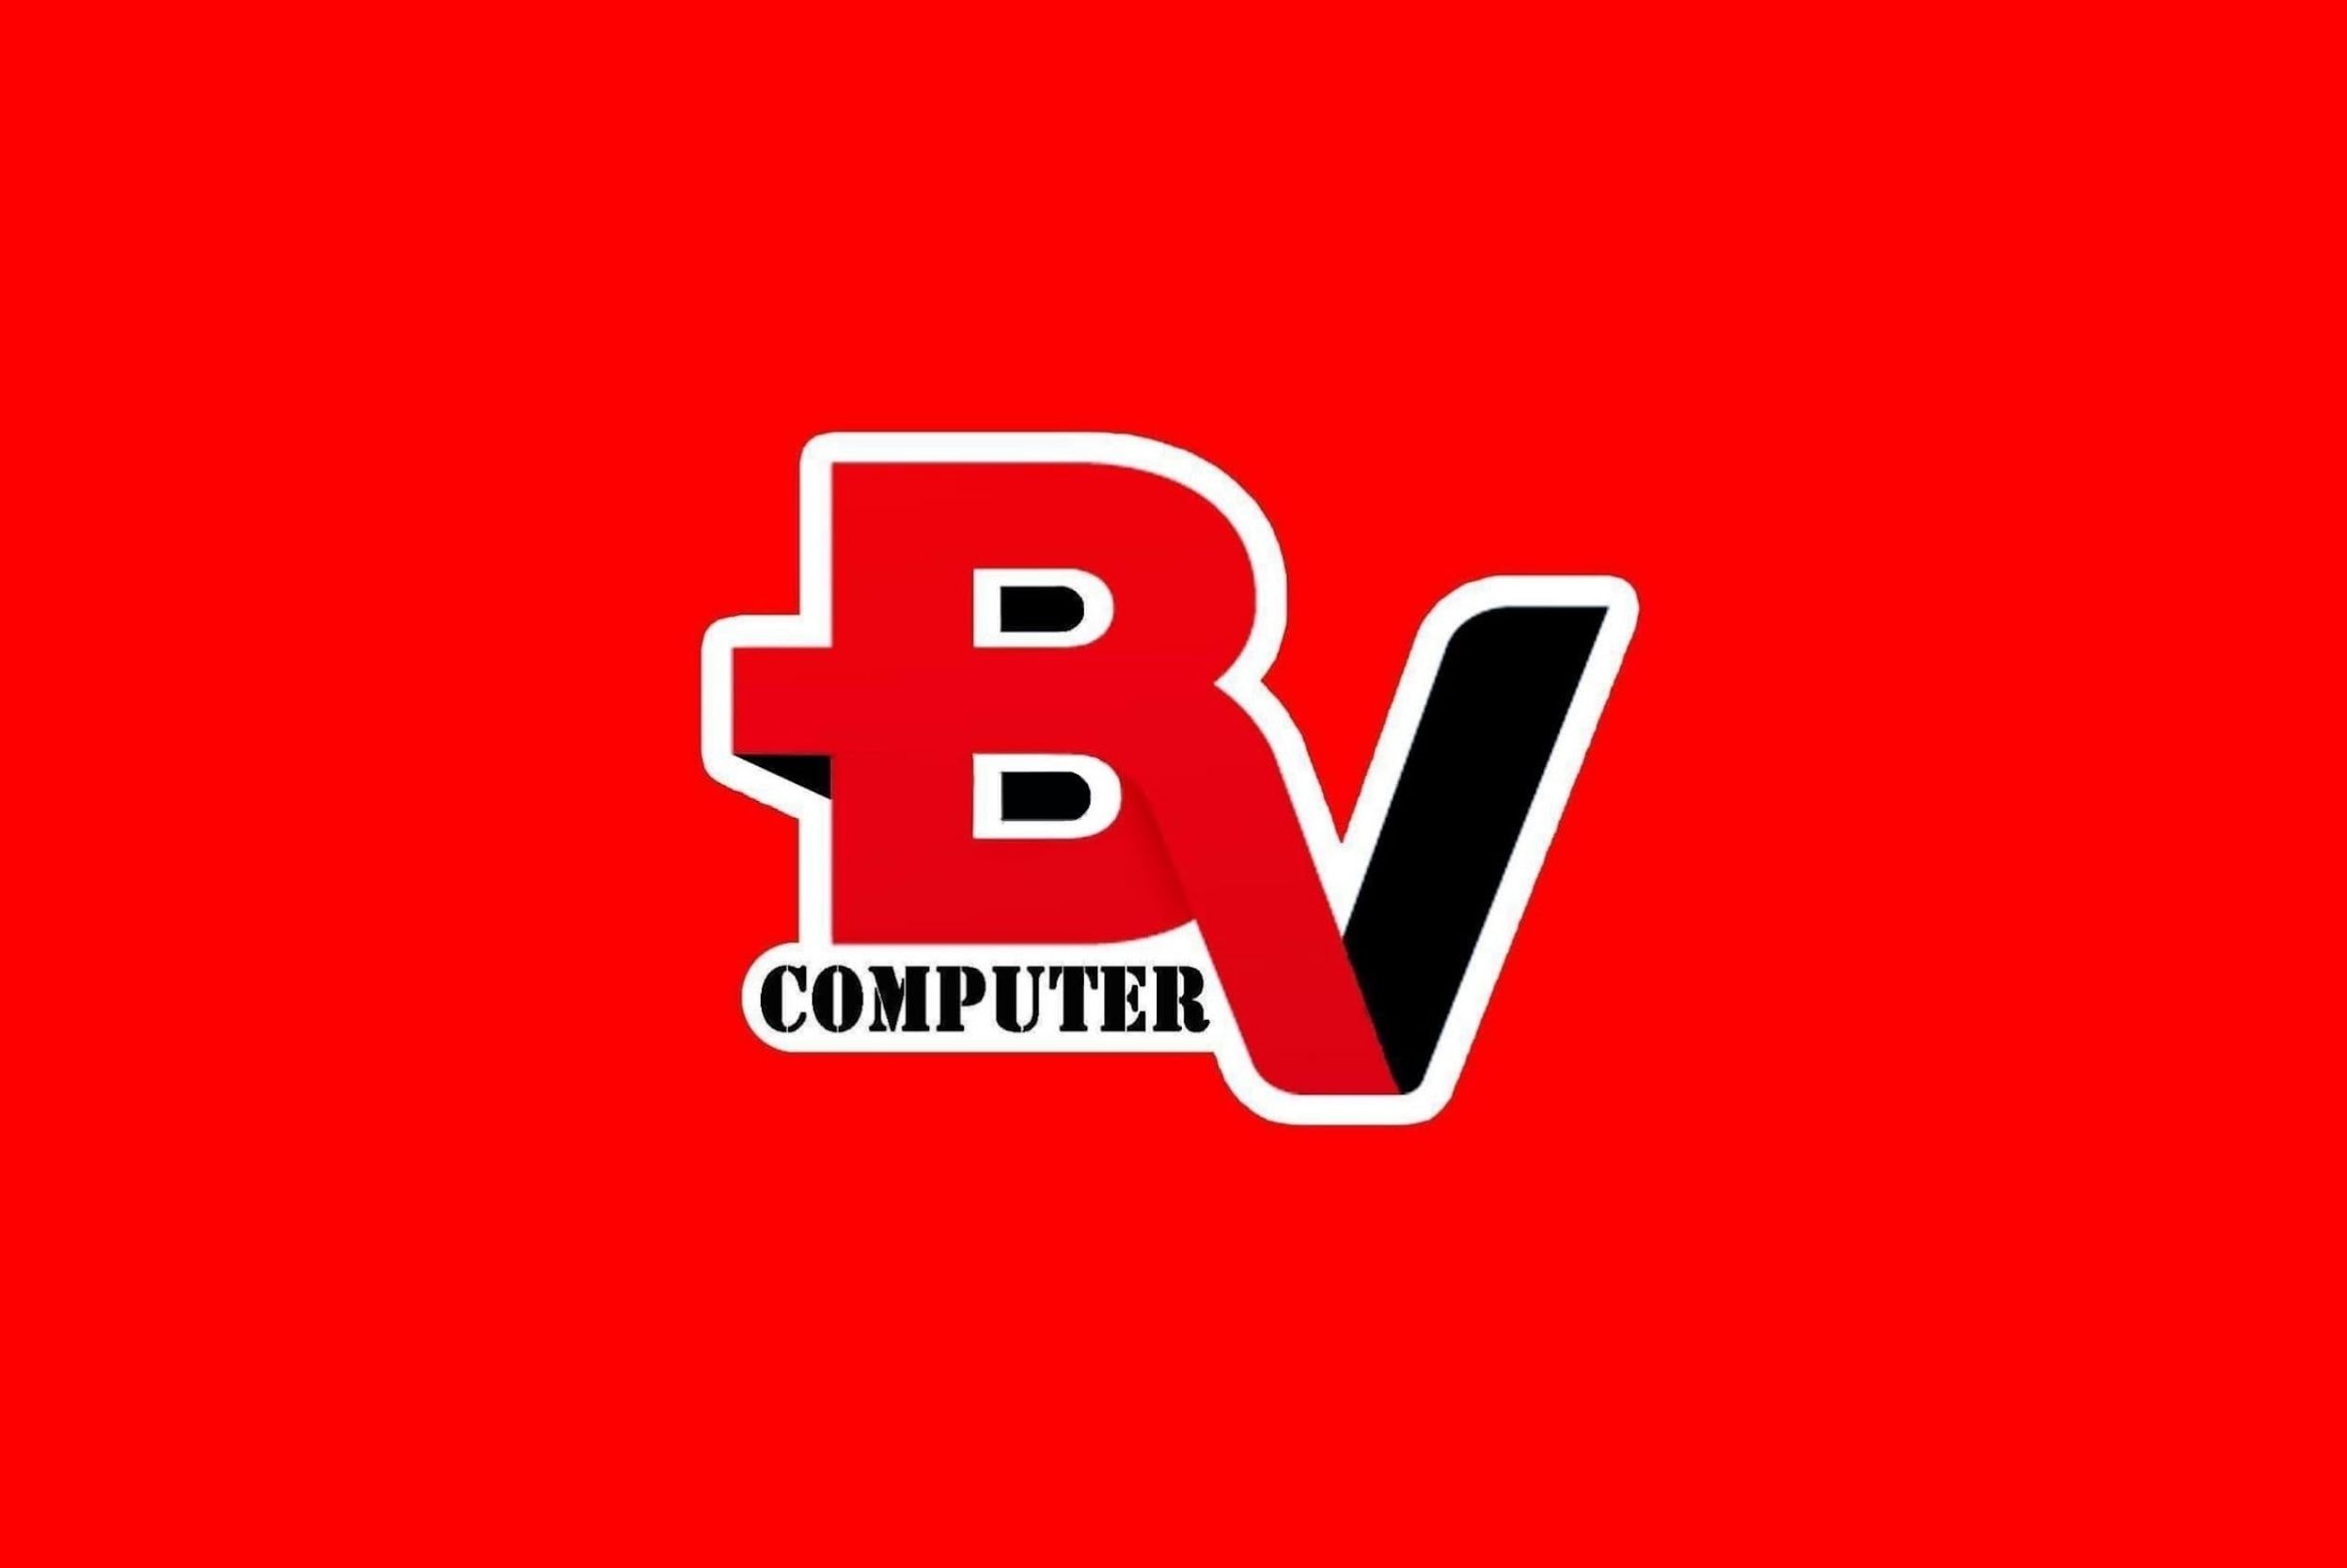 bac-viet-computer-logo